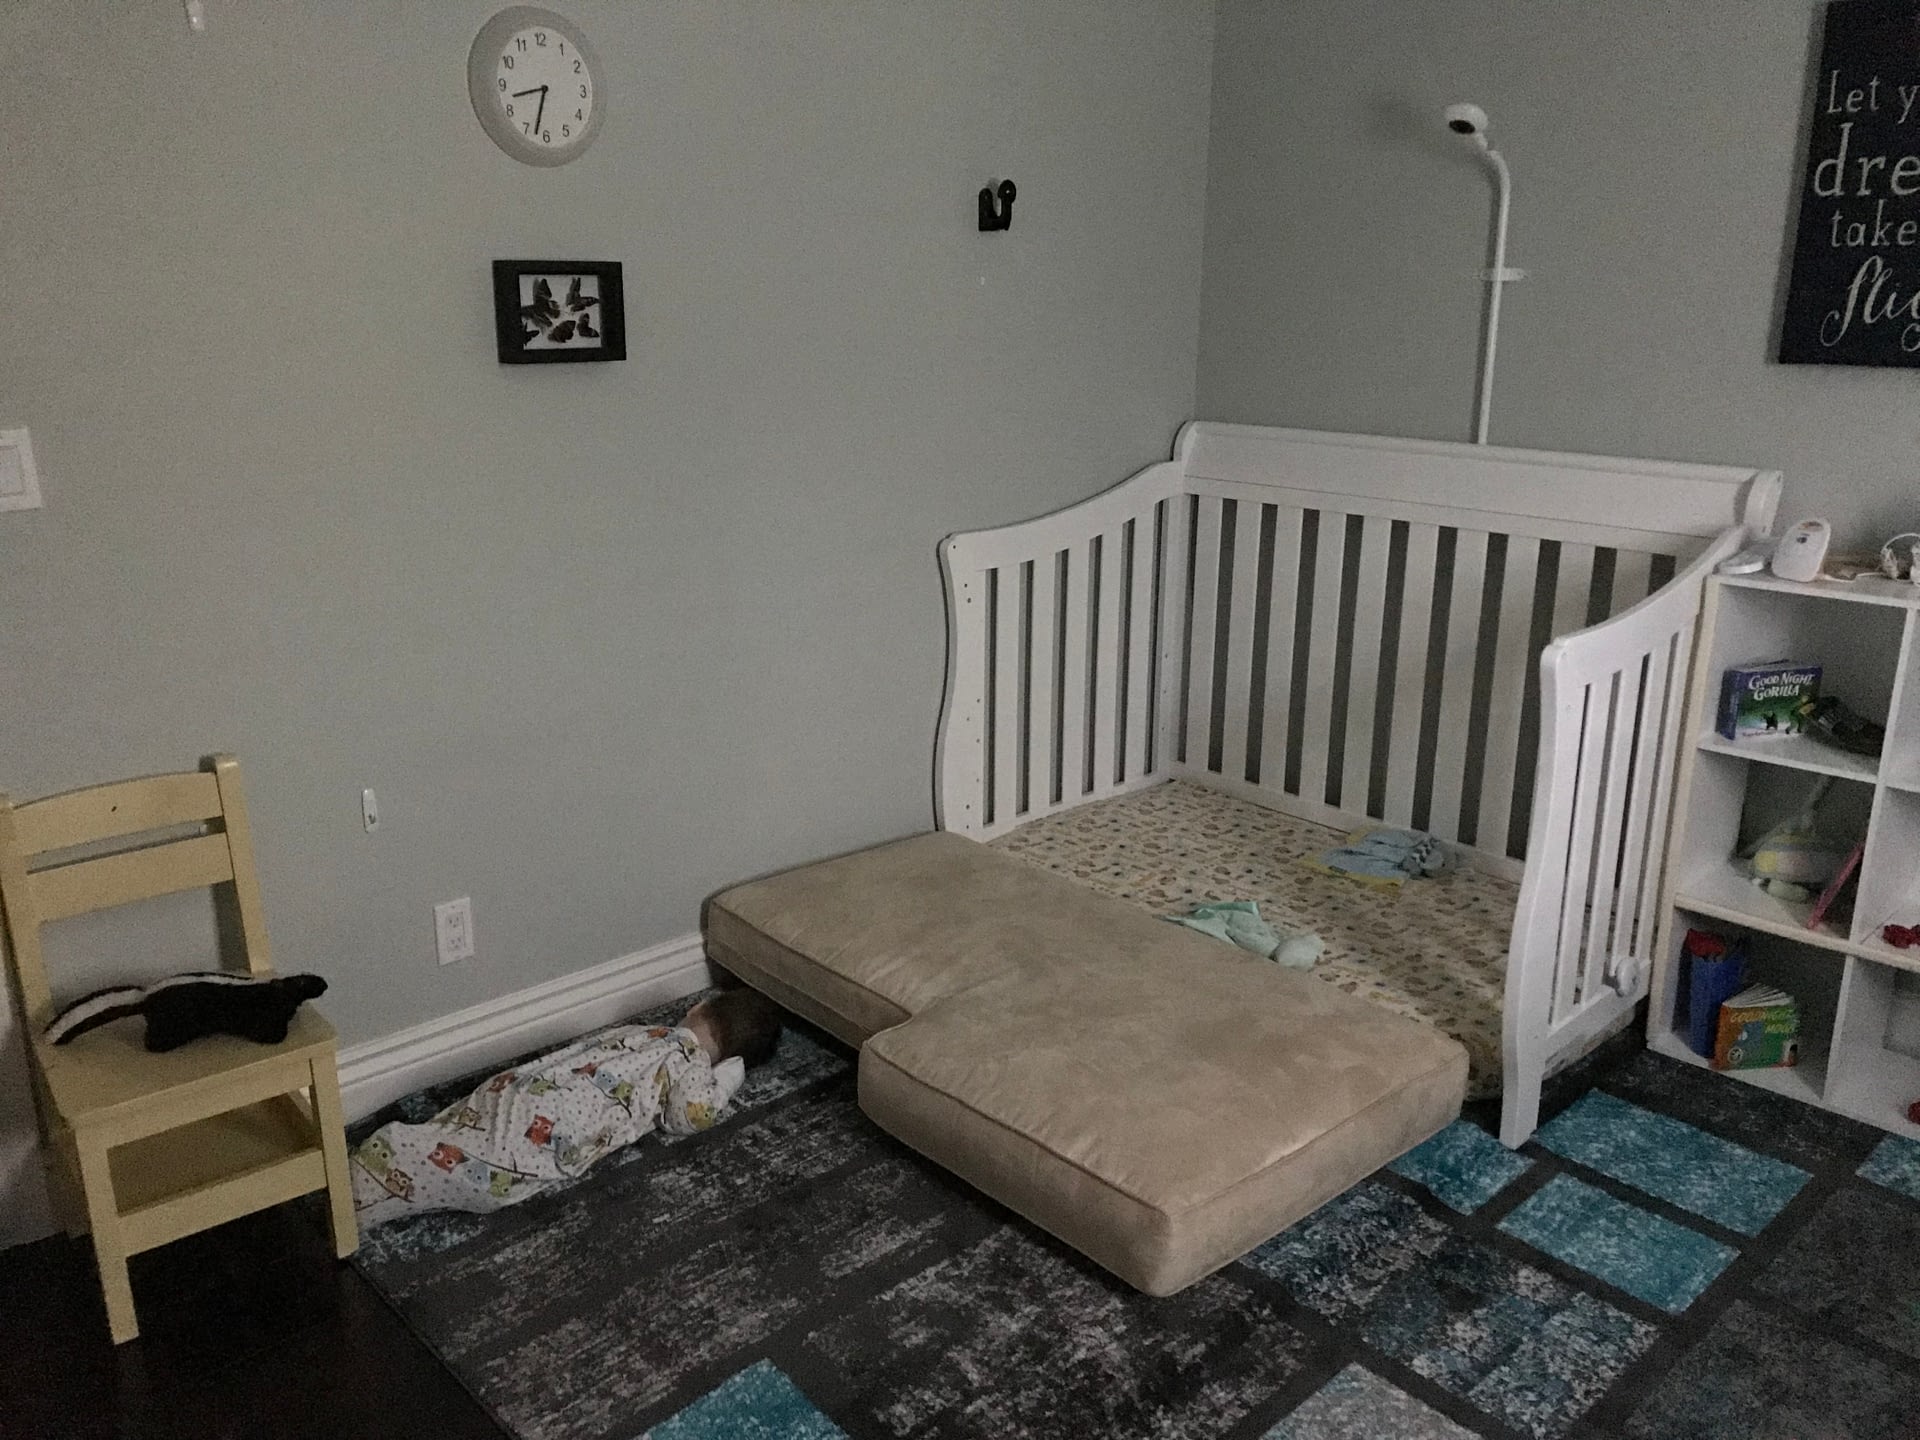 crib mattress on floor for baby